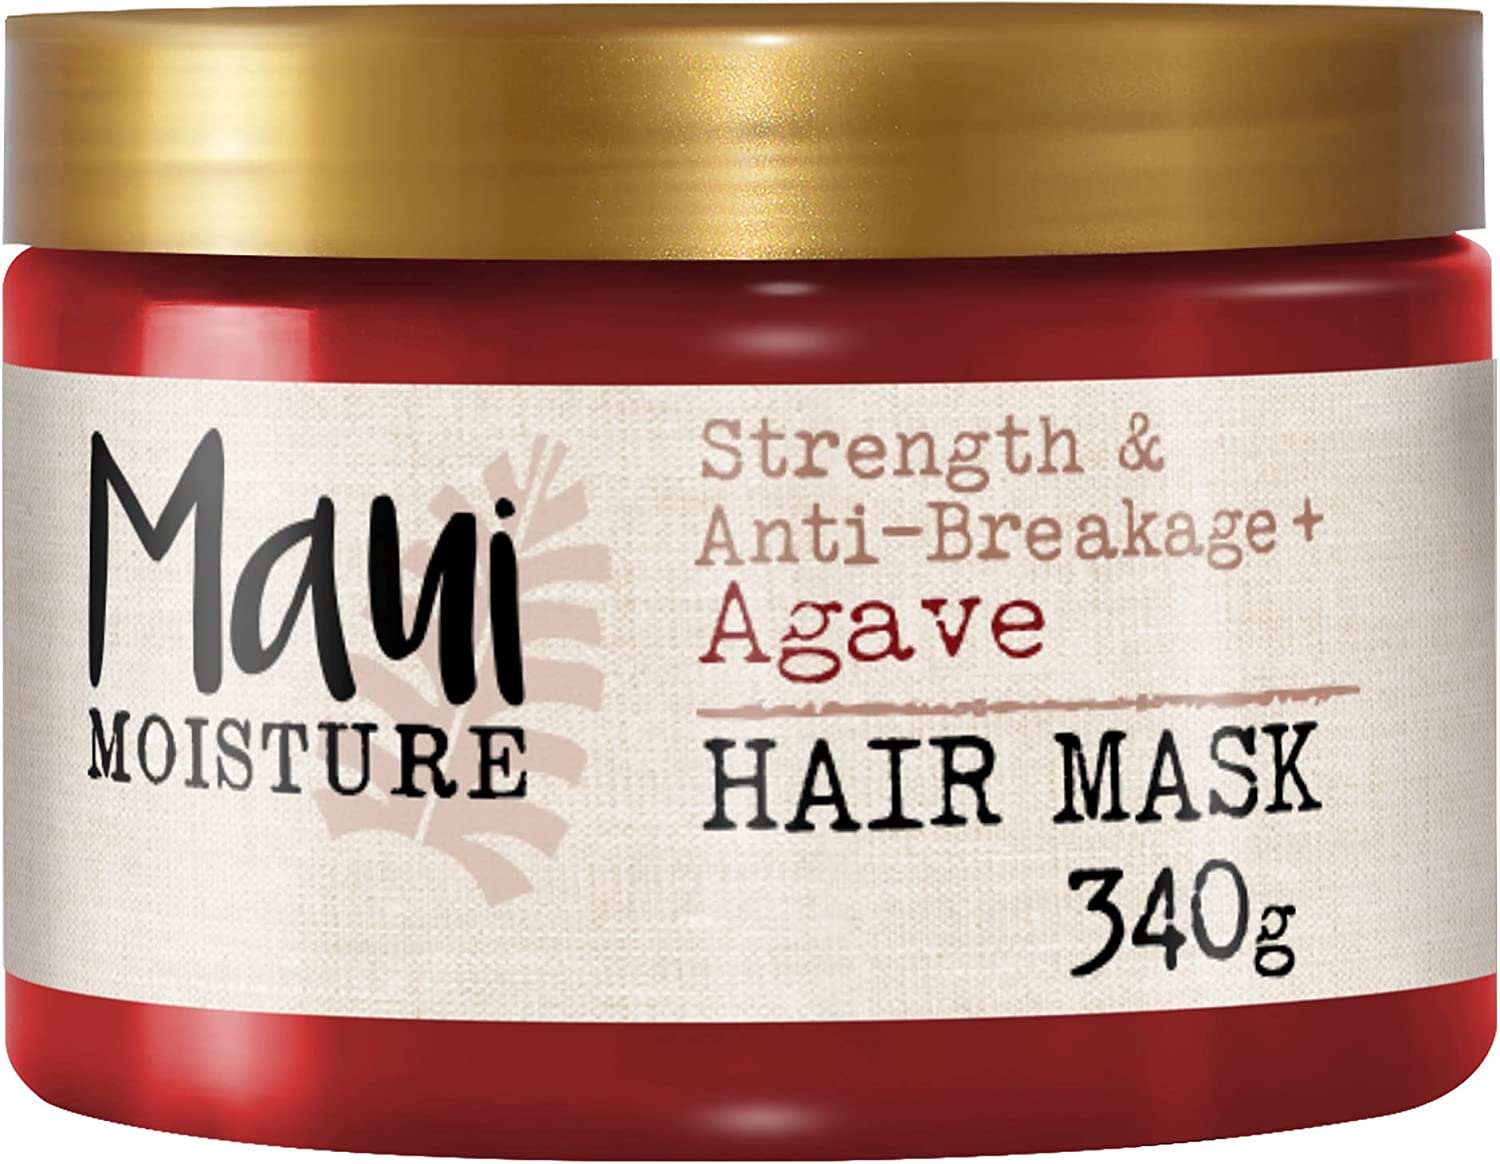 Maui Moisture Strength & Anti-Breakage Hair Mask - Agave